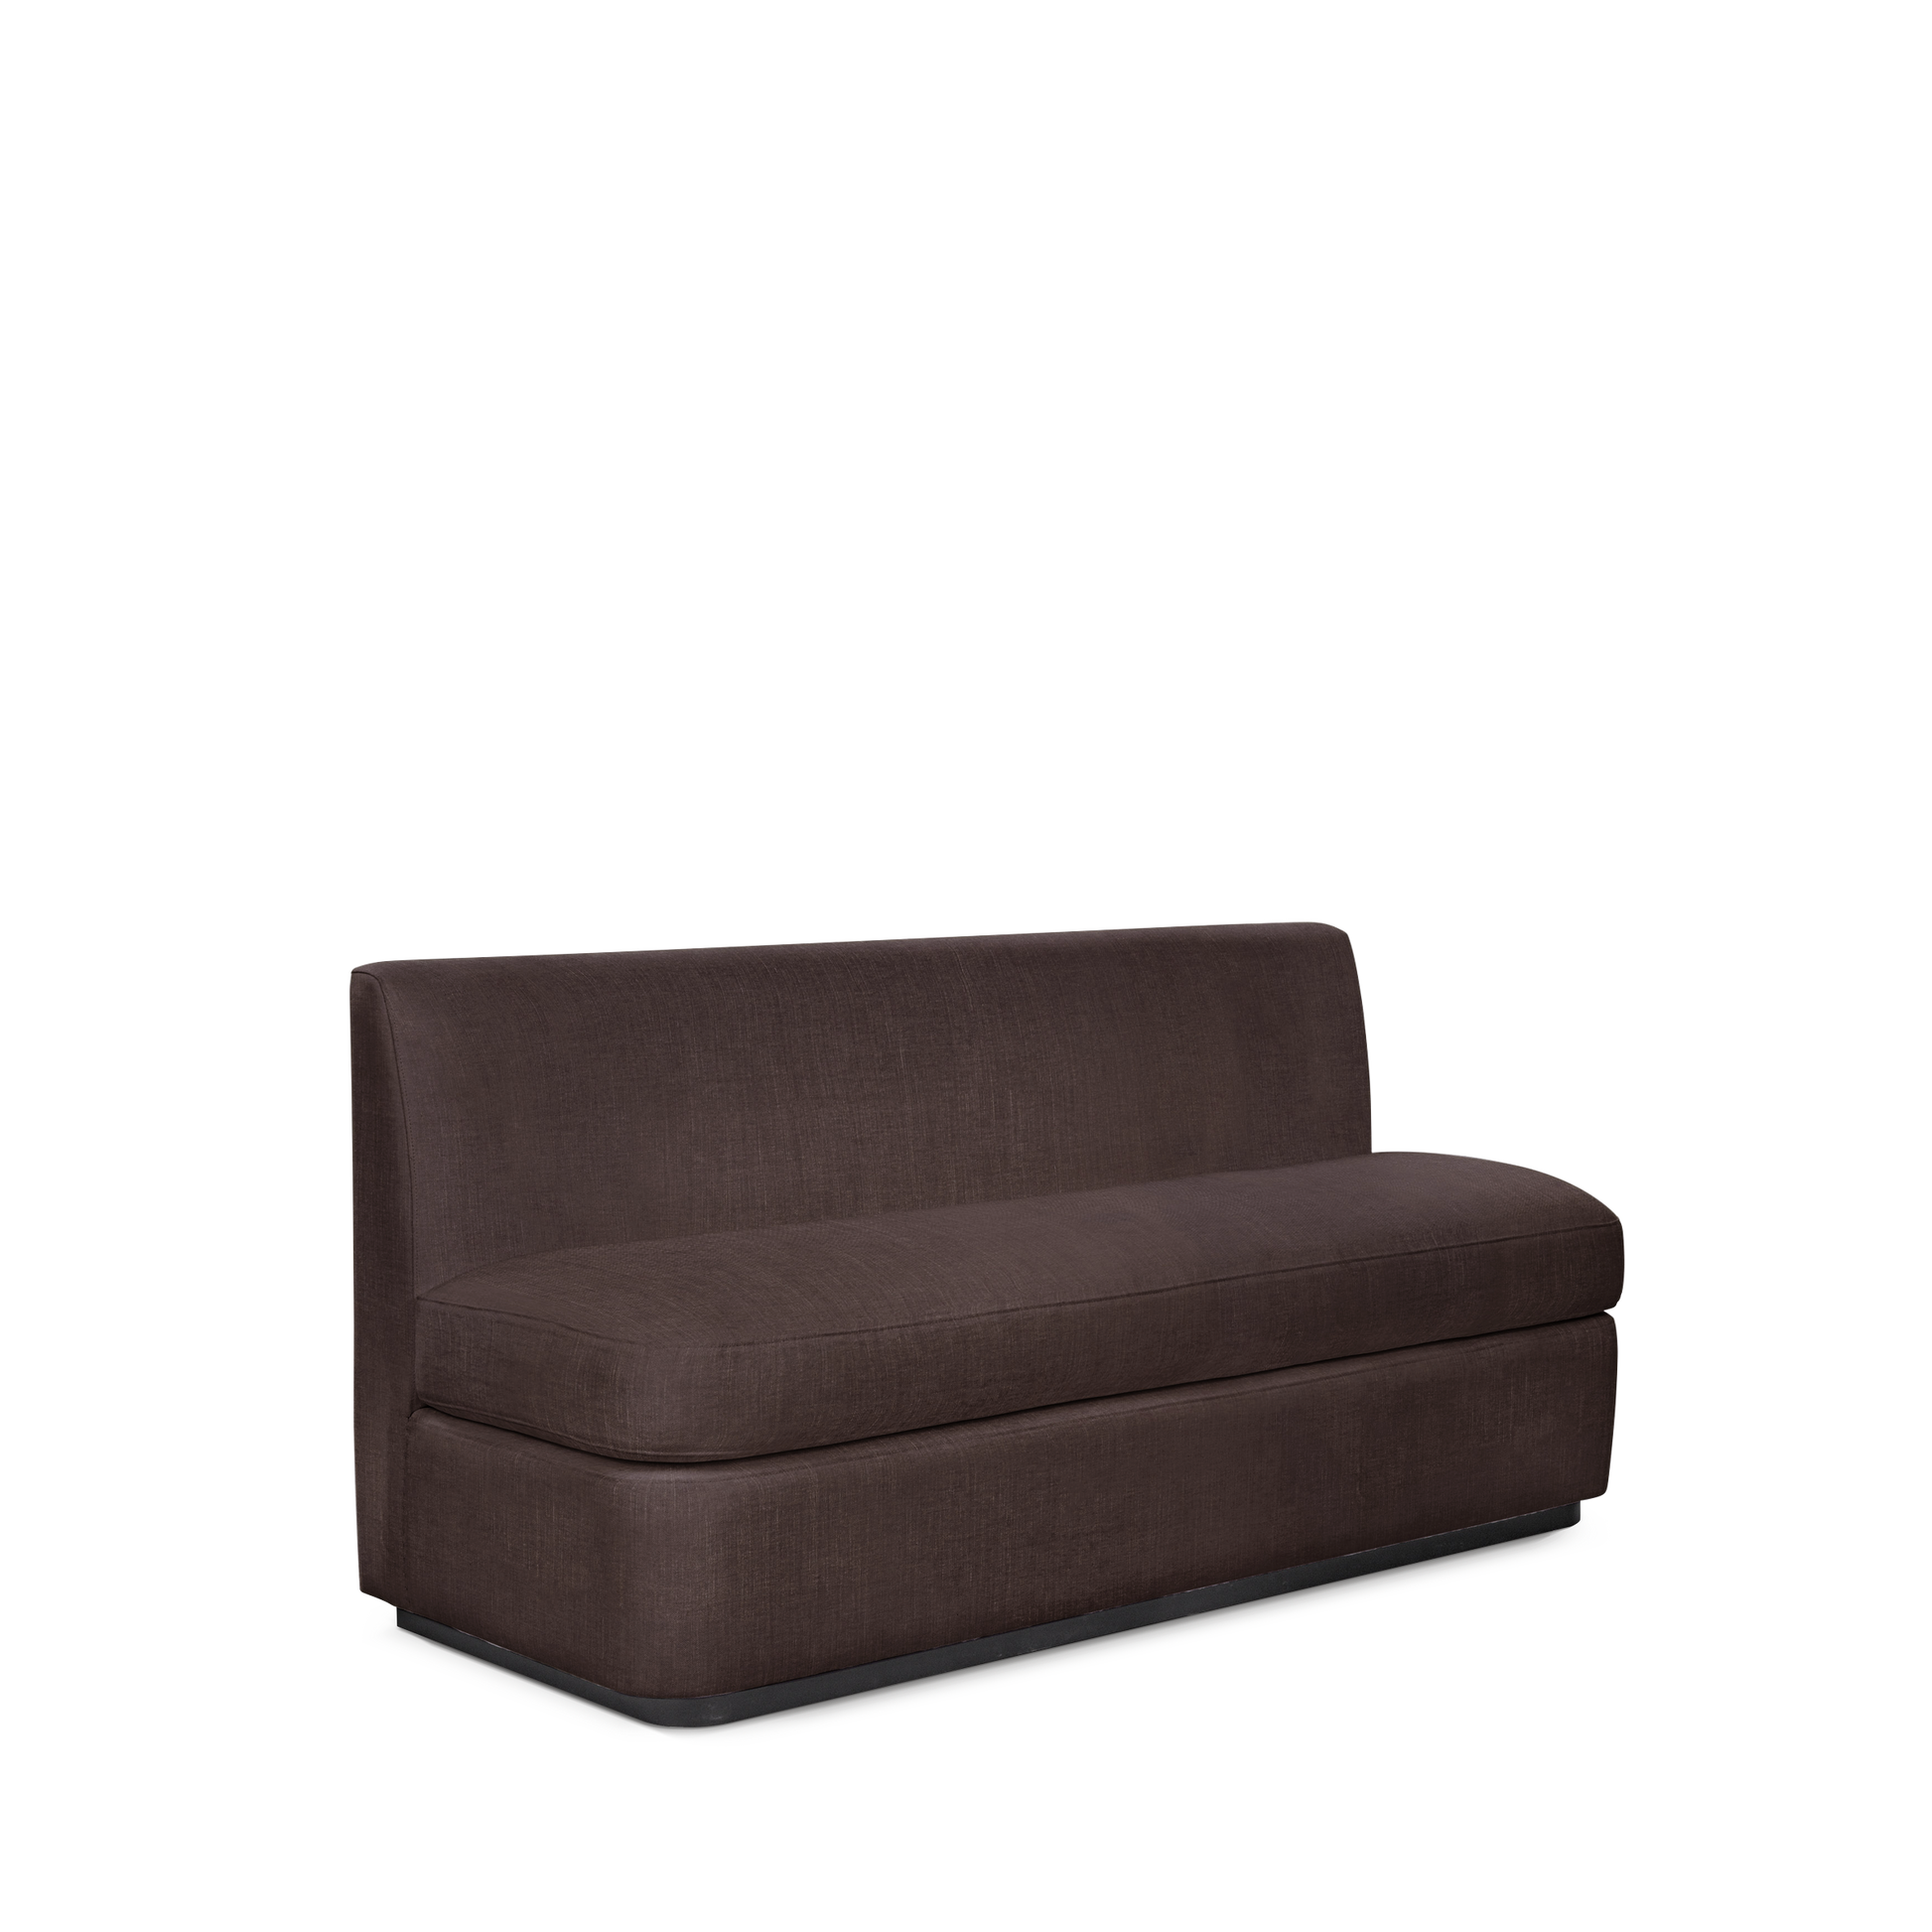  CALMA KITCHEN 3-seater sofa with linara brown textile